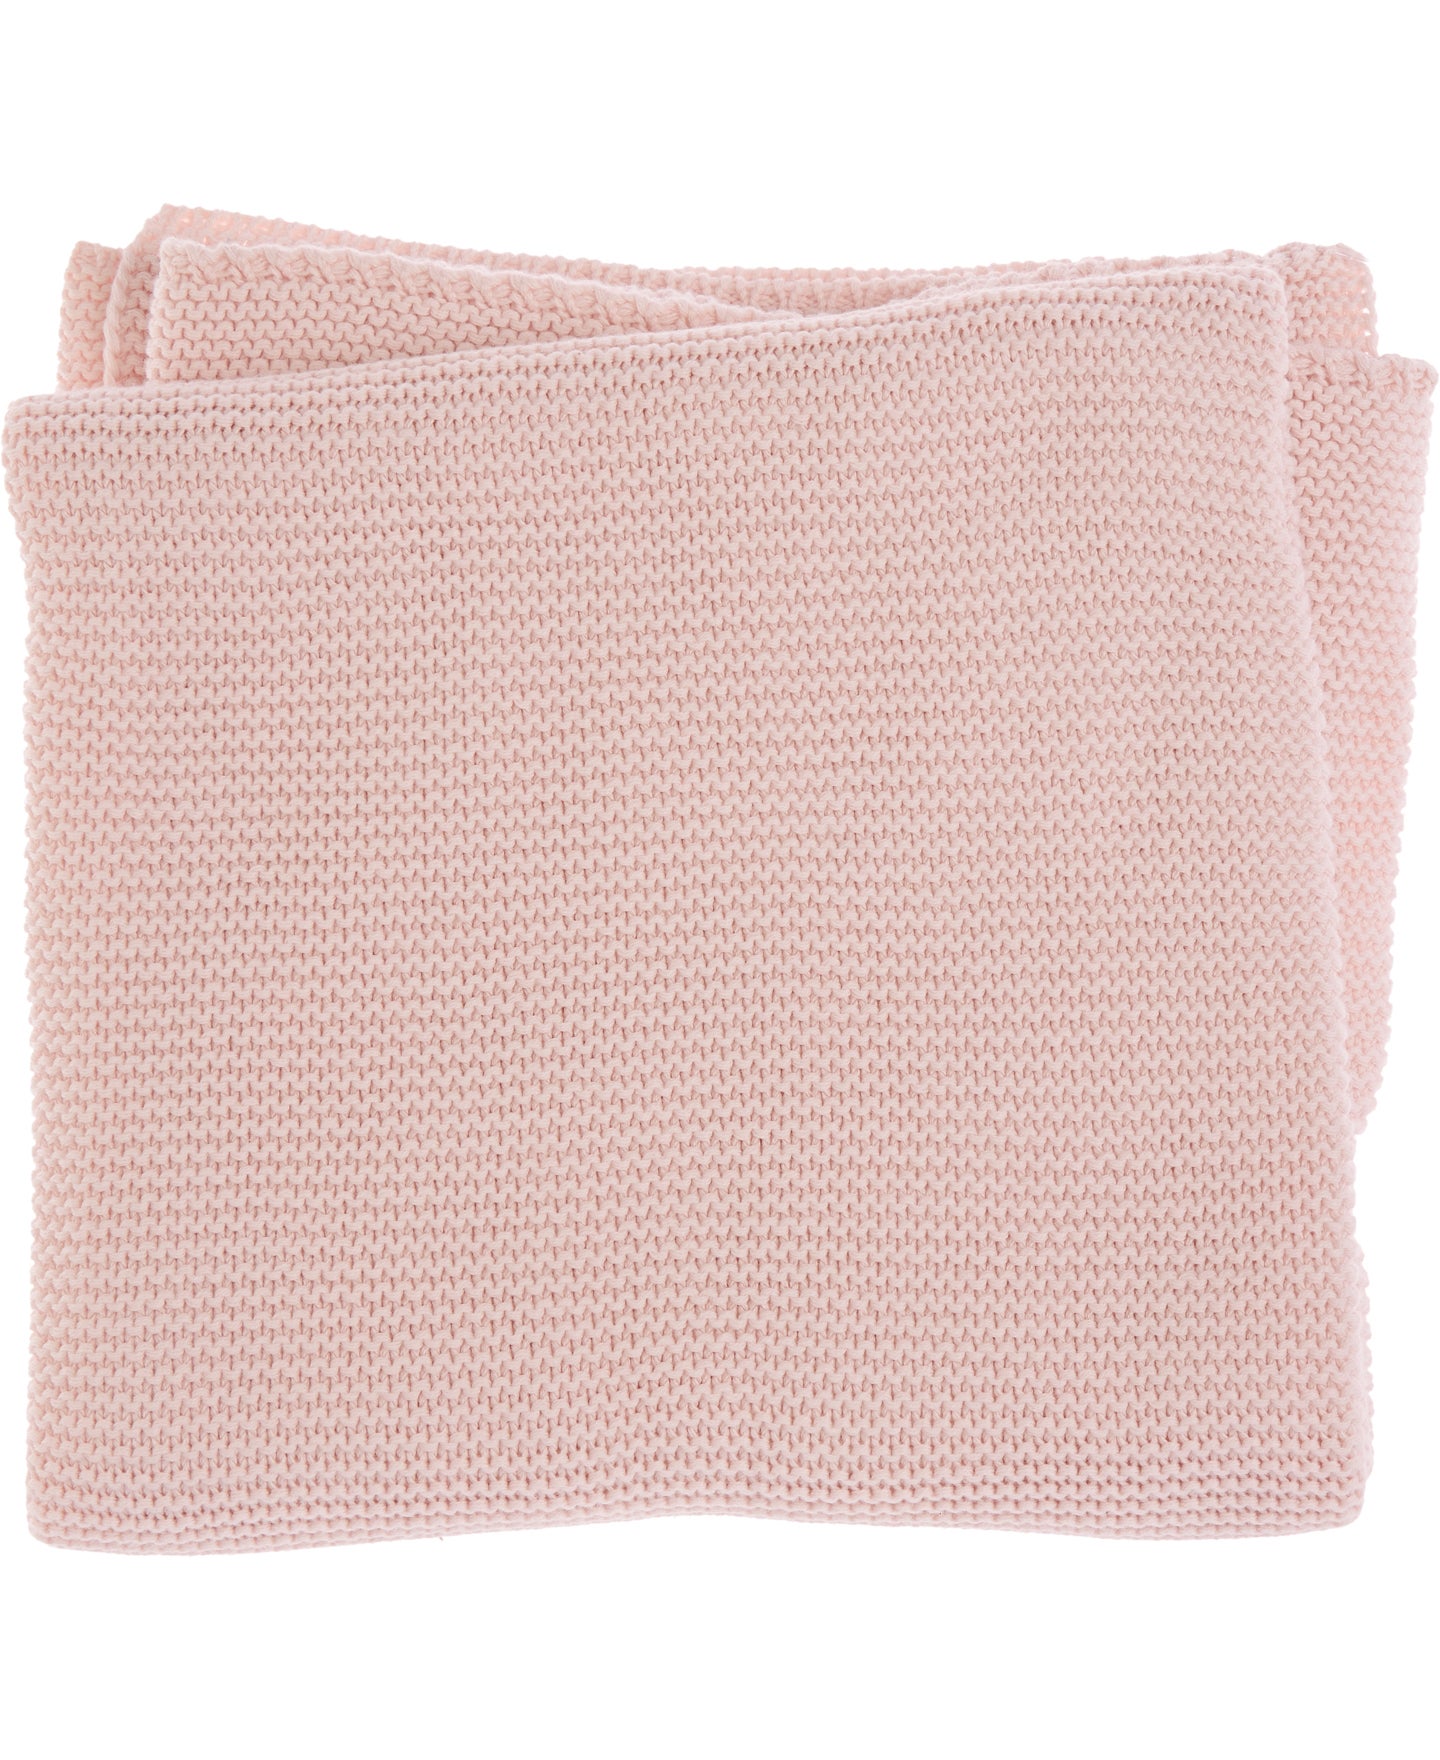 Chalk Pink Blanket | Chunky Knit Blanket